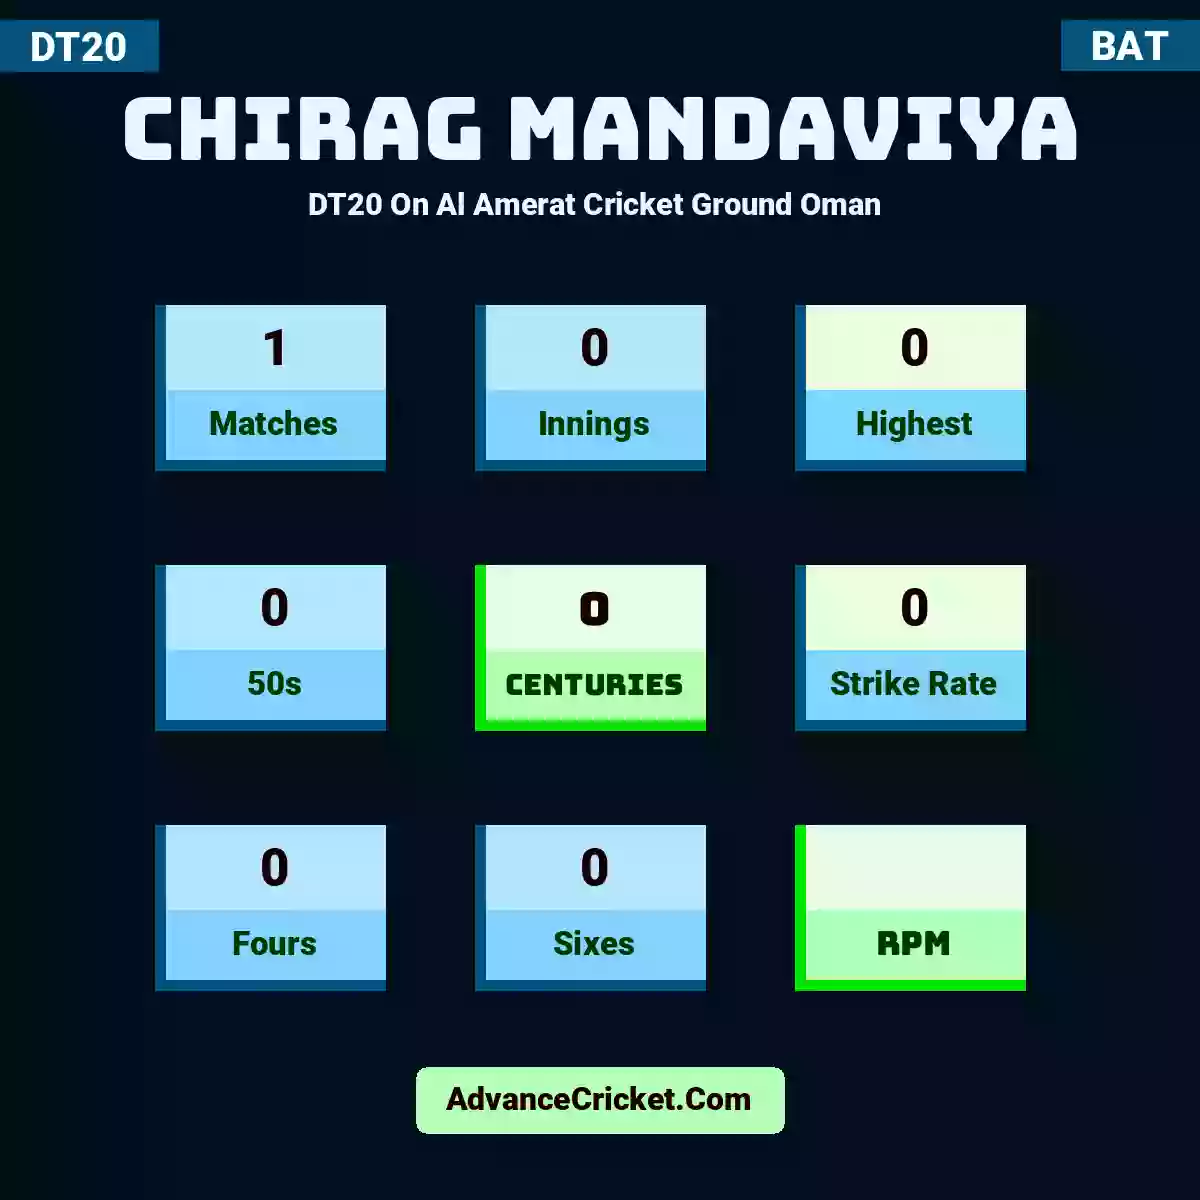 Chirag Mandaviya DT20  On Al Amerat Cricket Ground Oman , Chirag Mandaviya played 1 matches, scored 0 runs as highest, 0 half-centuries, and 0 centuries, with a strike rate of 0. C.Mandaviya hit 0 fours and 0 sixes.